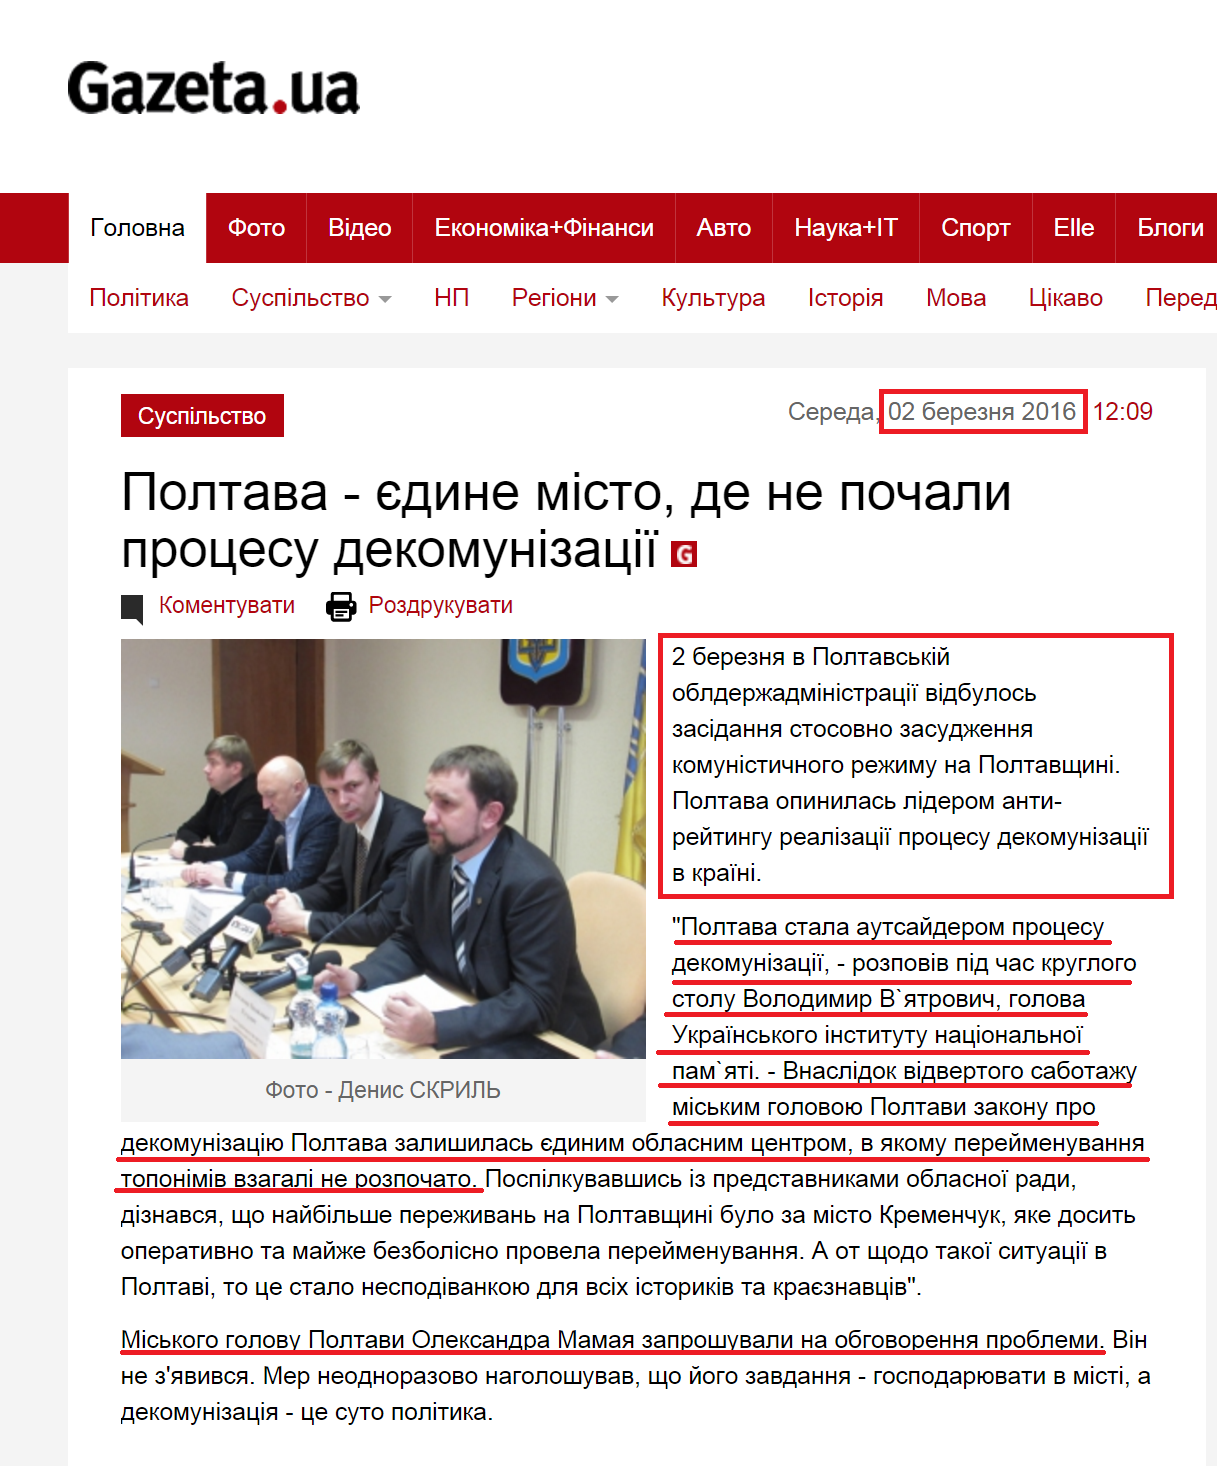 http://gazeta.ua/articles/life/_poltava-yedine-misto-de-ne-pochali-procesu-dekomunizaciyi/682402